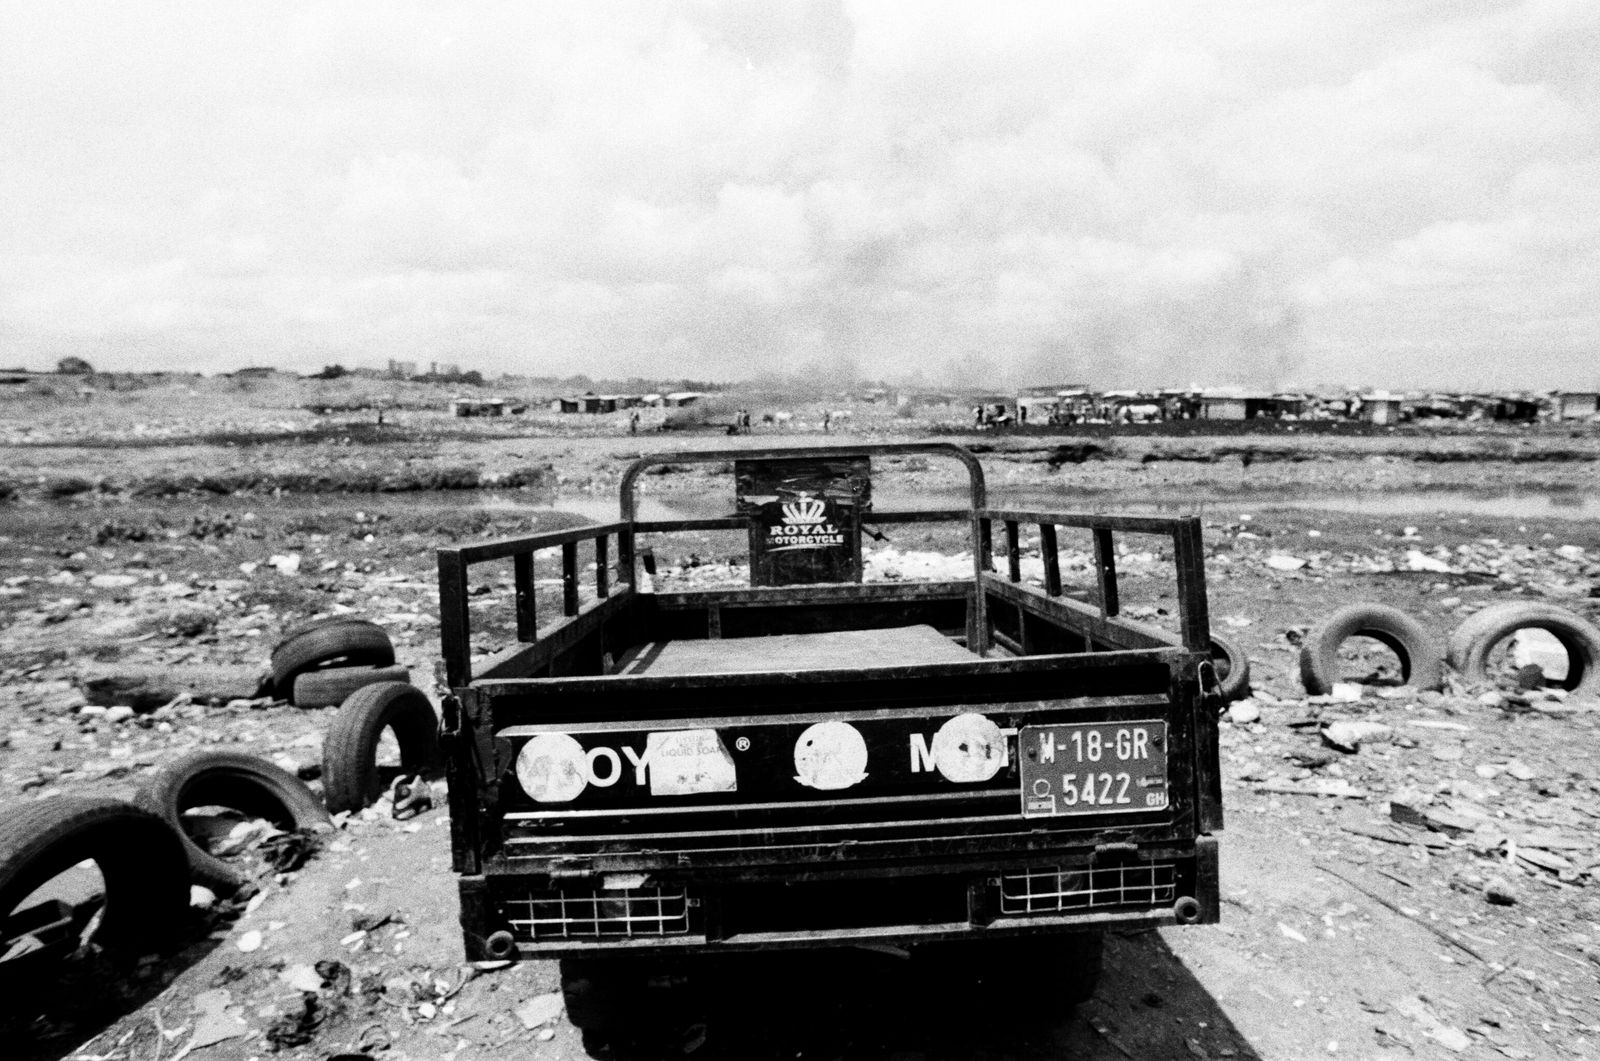 © carolina rapezzi - Accra, Agbogbloshie. View of "Kilimanjaro" from Sodom and Gomorrah slum.